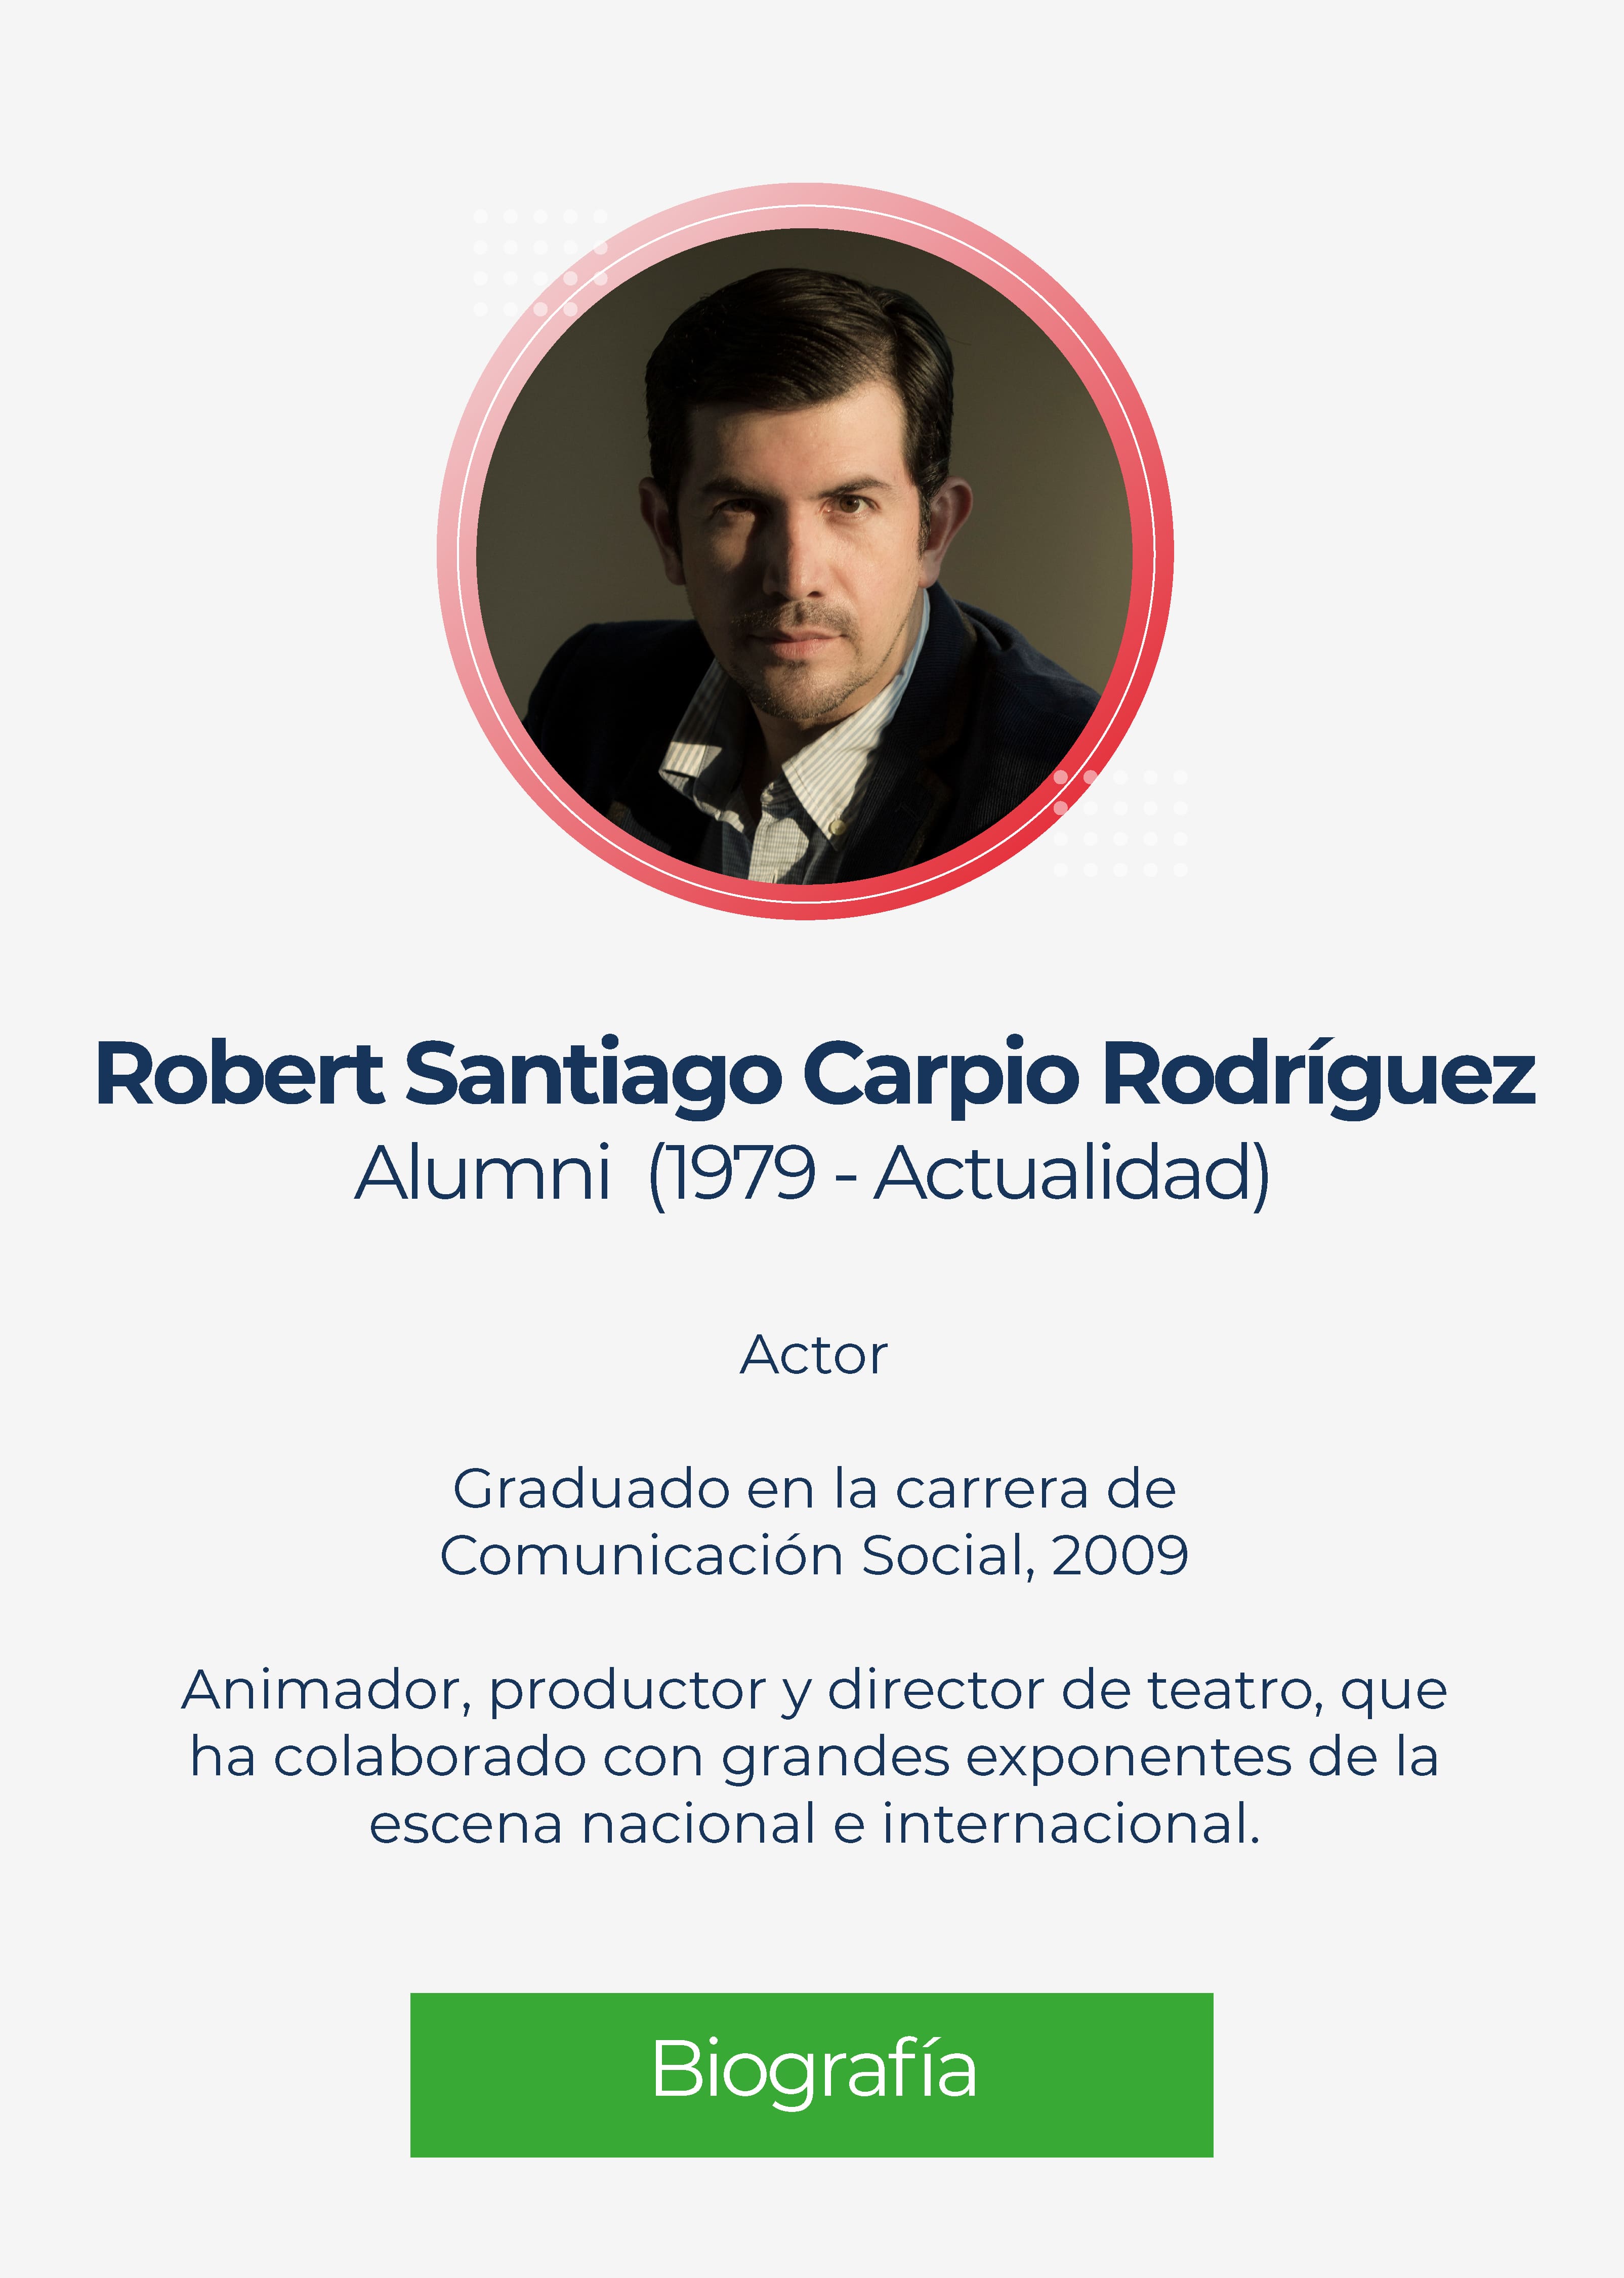 Robert Santiago Carpio Rodríguez